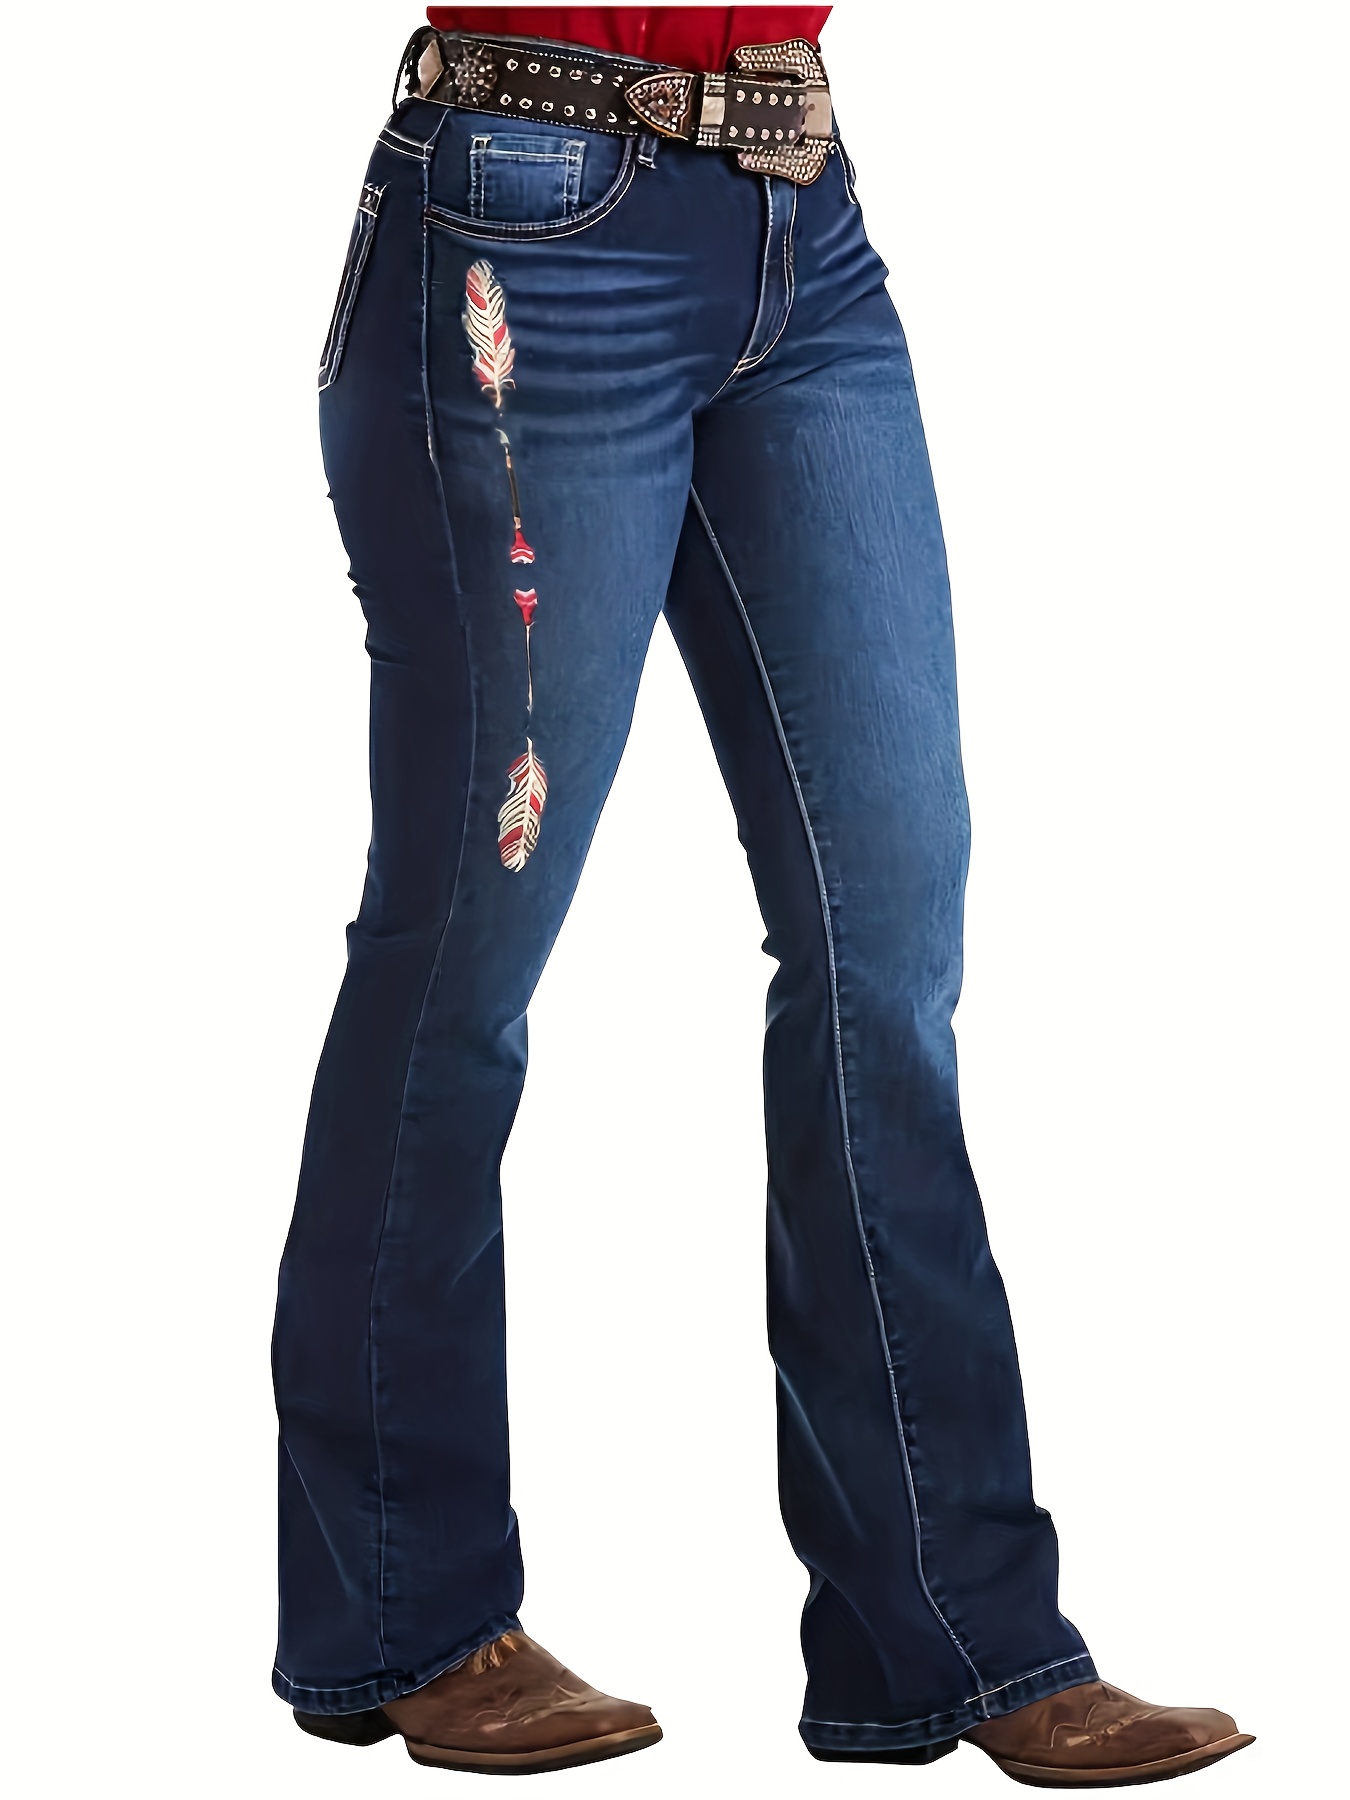 Washed Grey Retro Flare Leg Jeans, High Stretch Slash Pocket Bootcut Denim  Pants, Women's Denim Jeans & Clothing